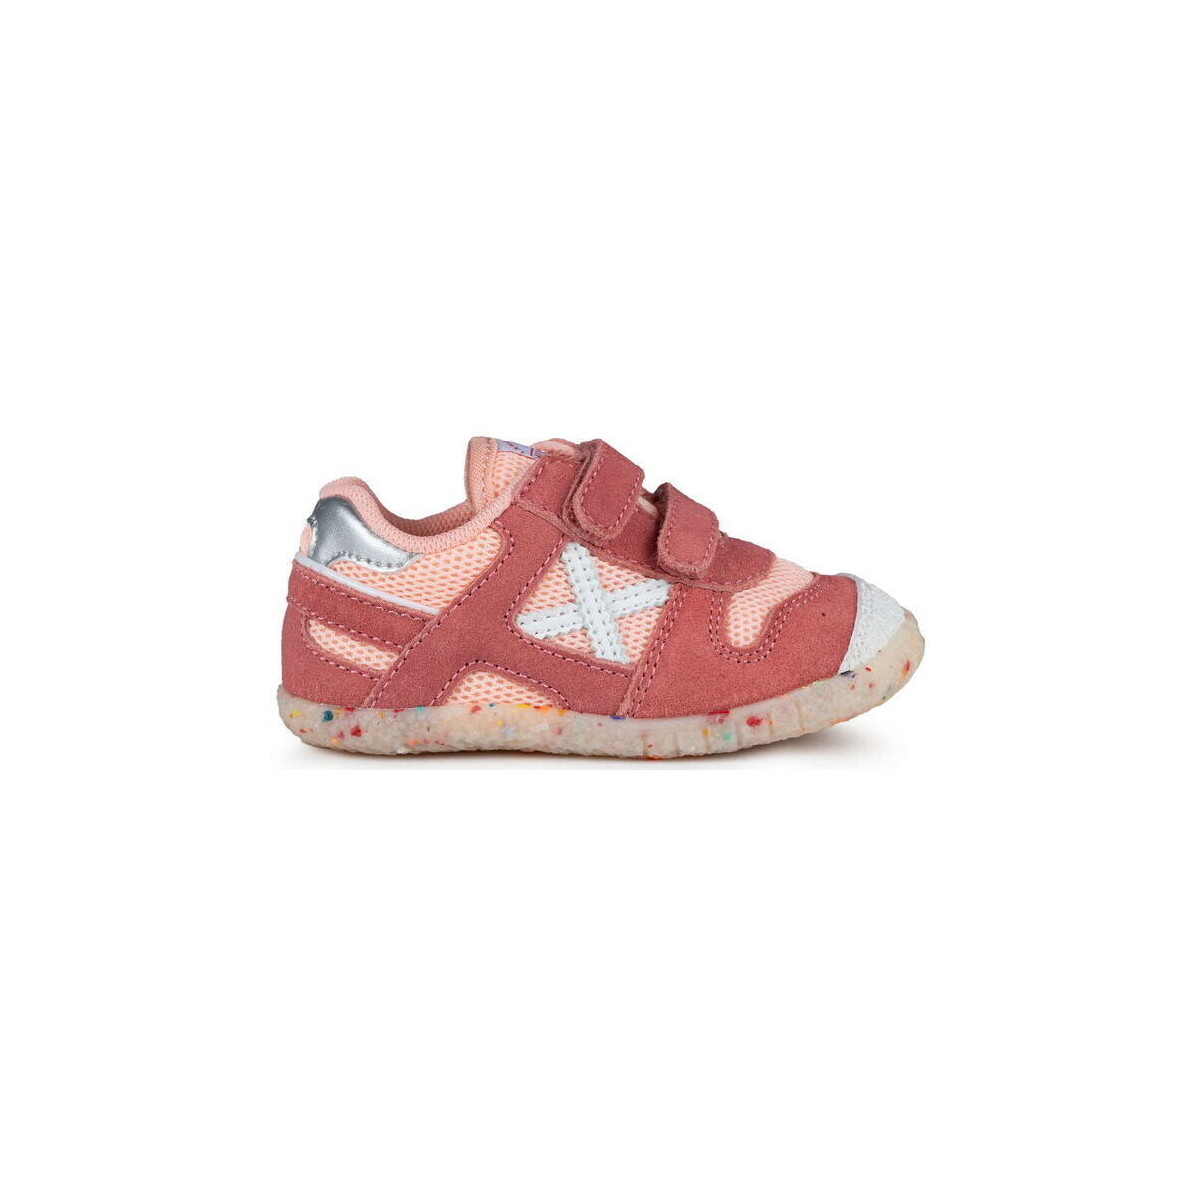 Schoenen Kinderen Sneakers Munich Baby goal 8172591 Coral Multicolour